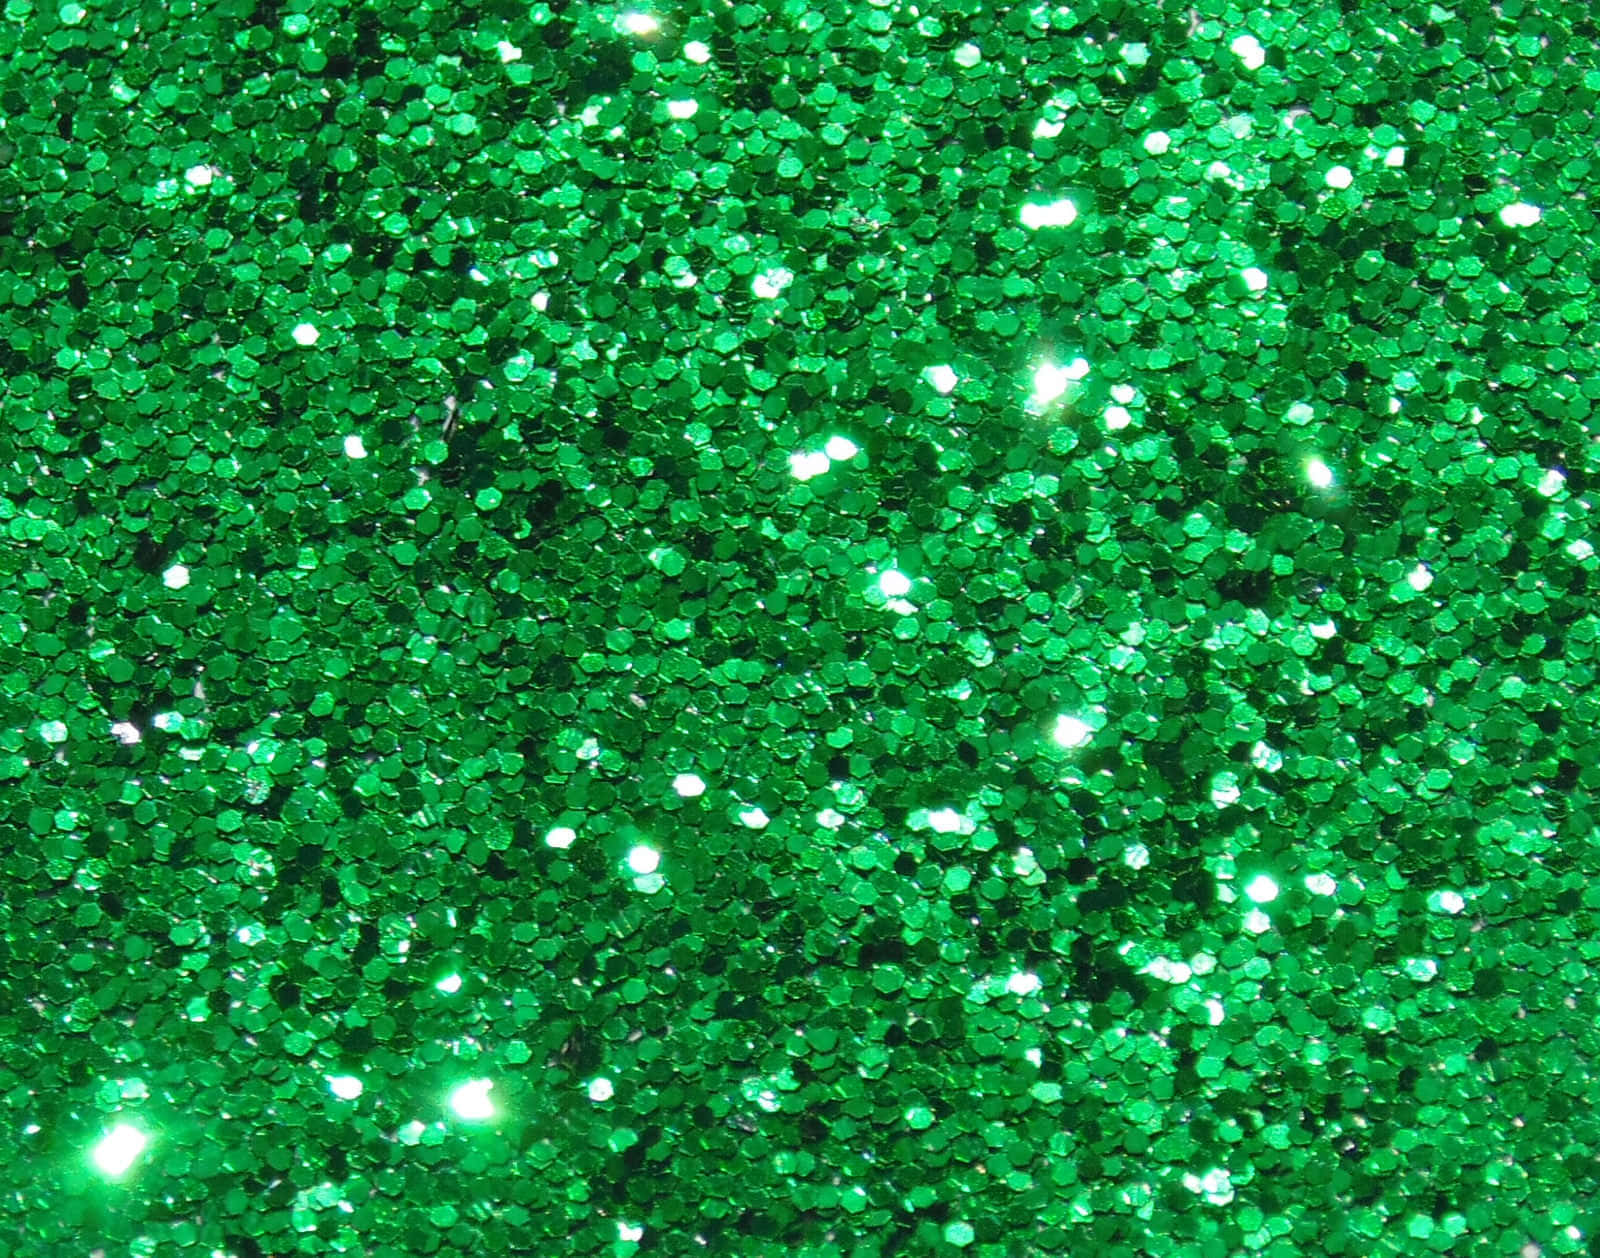 100+] Green Glitter Backgrounds